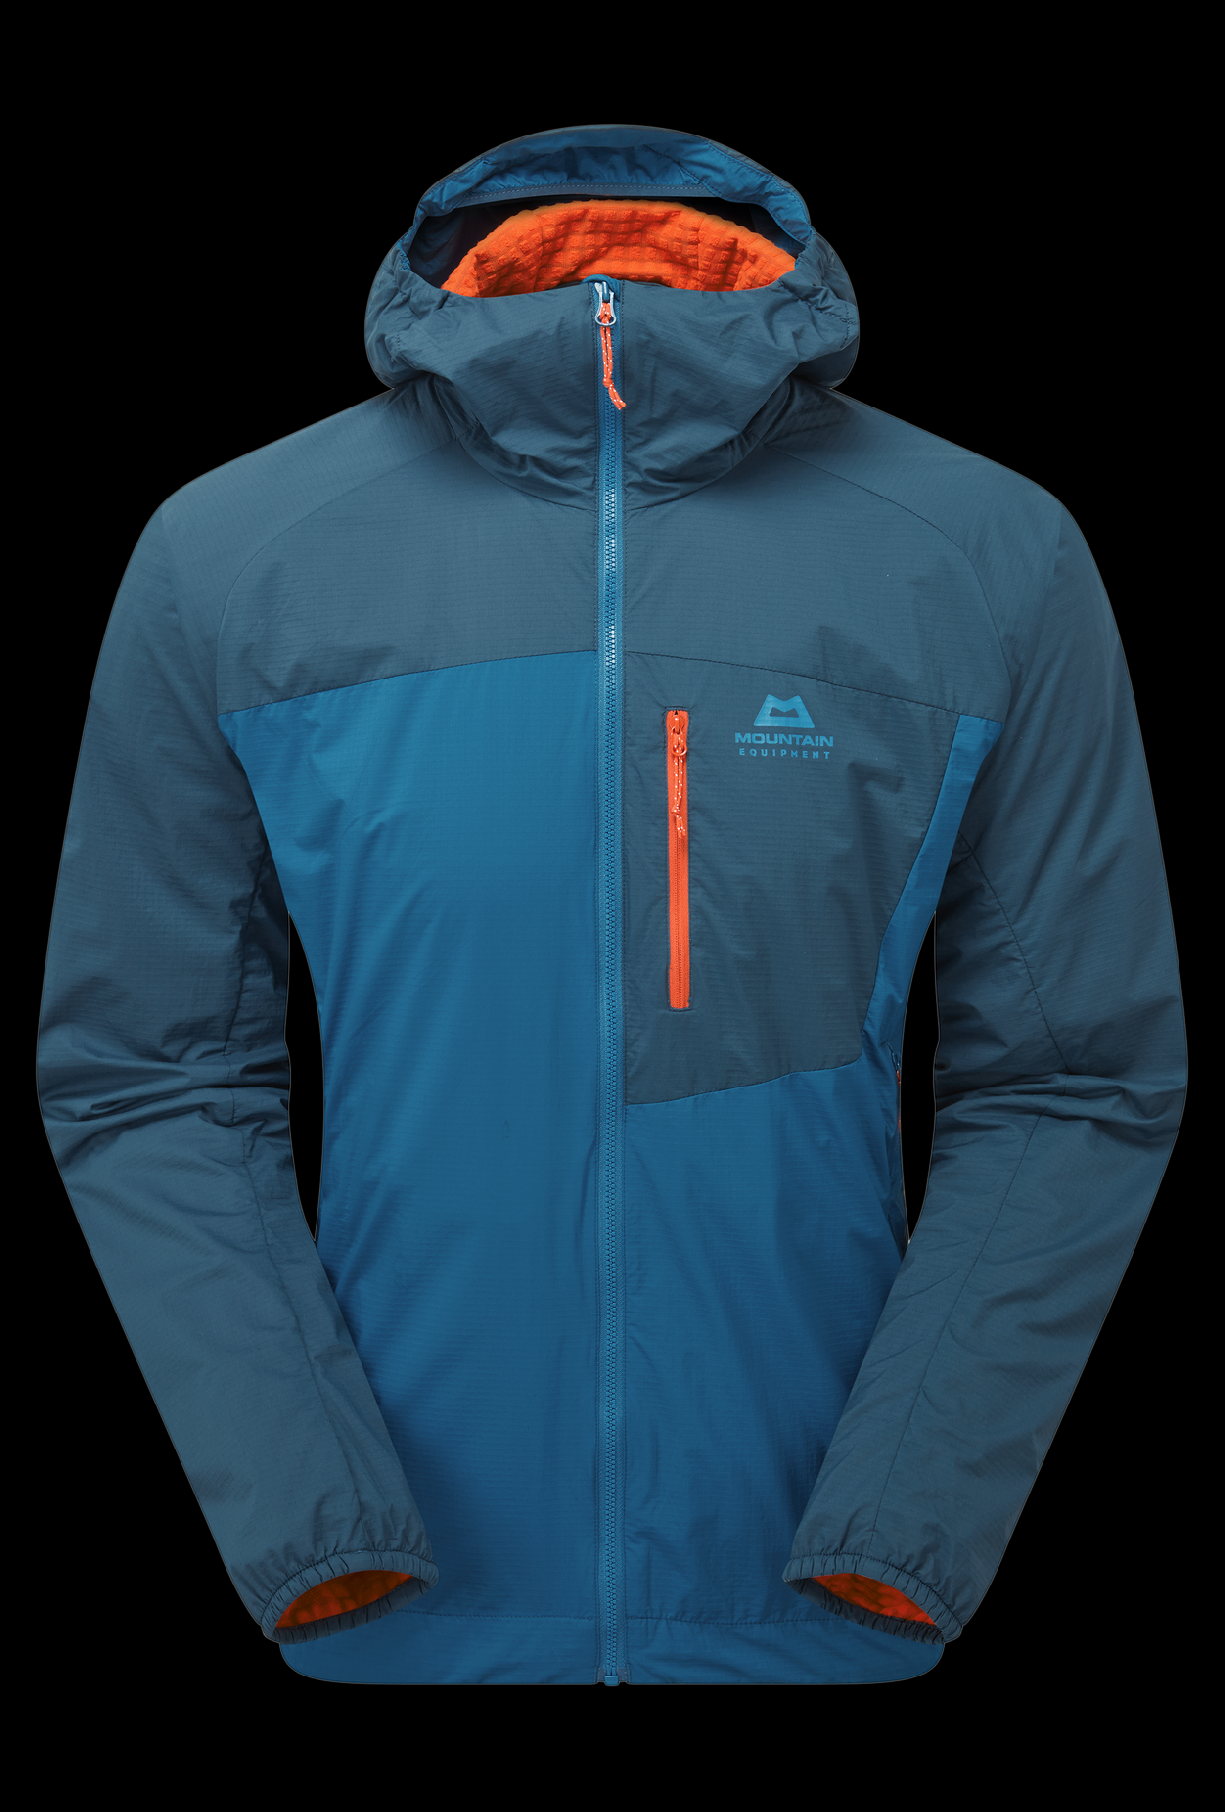 Mountain Equipment Aerotherm Jacket Men'S Barva: Alto/Majolica, Velikost: L